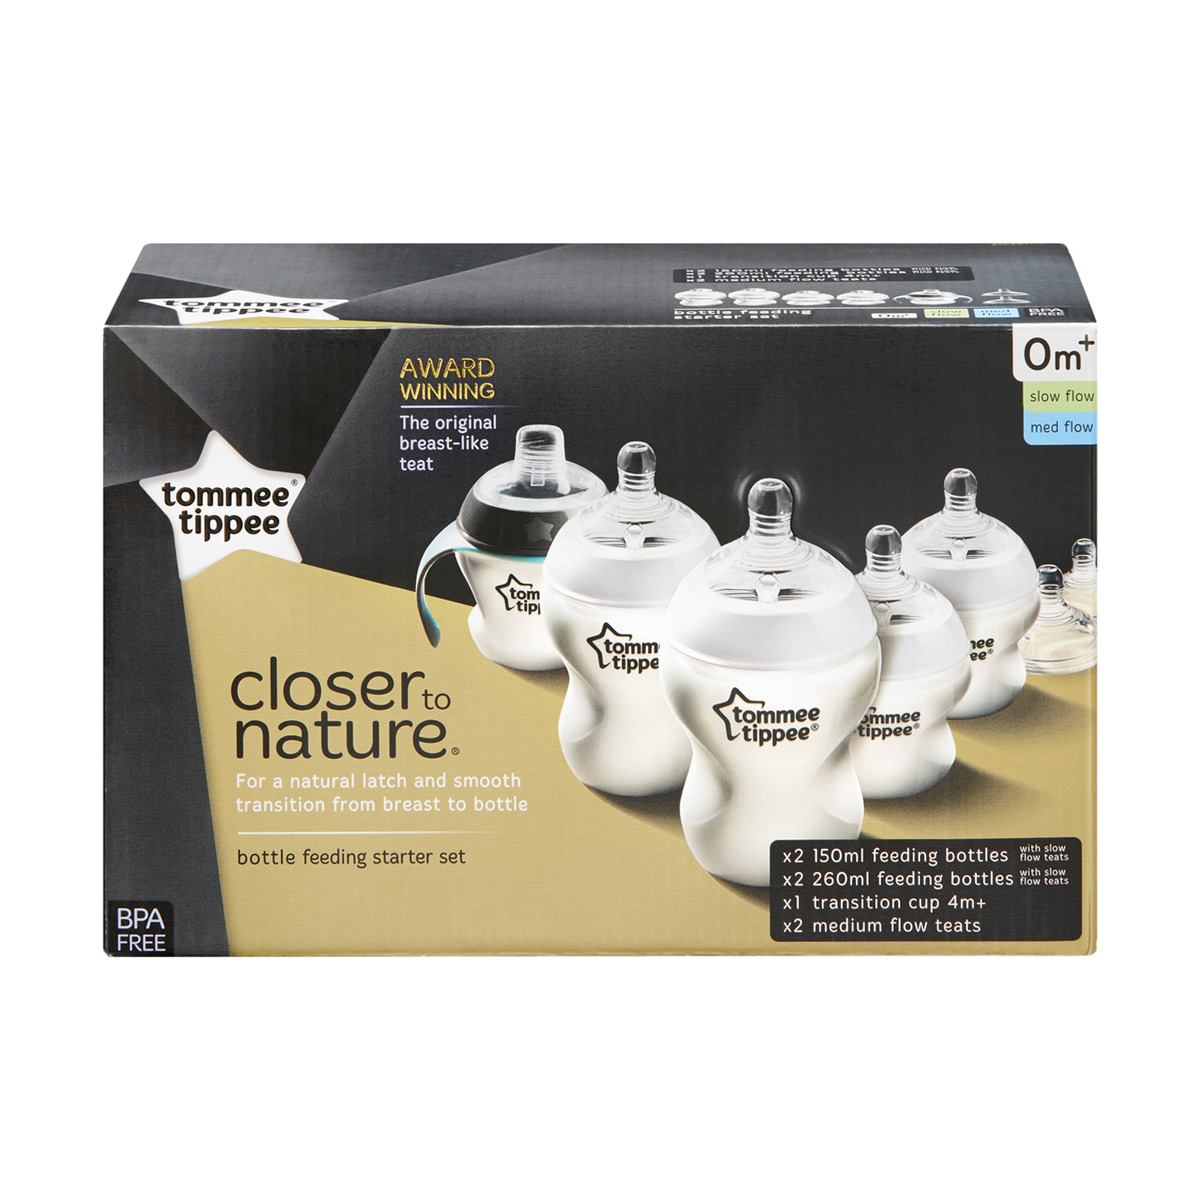 Closer To Nature Tommee Tippee Bottle Feeding Starter Kit - Pack of 7